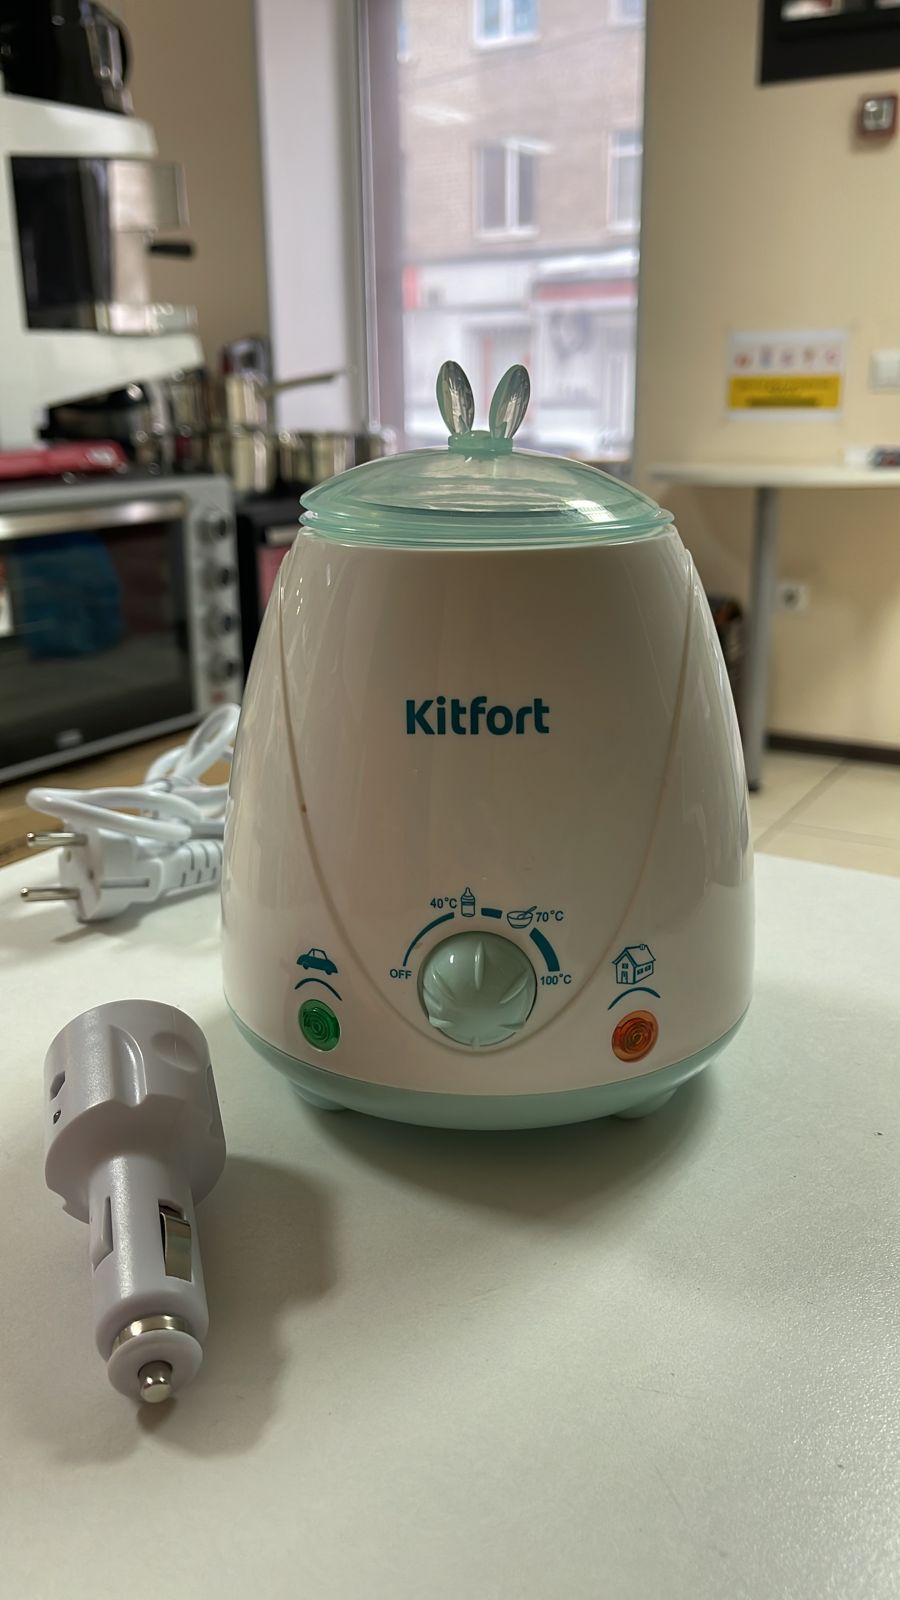    KitFort -2311 (5)